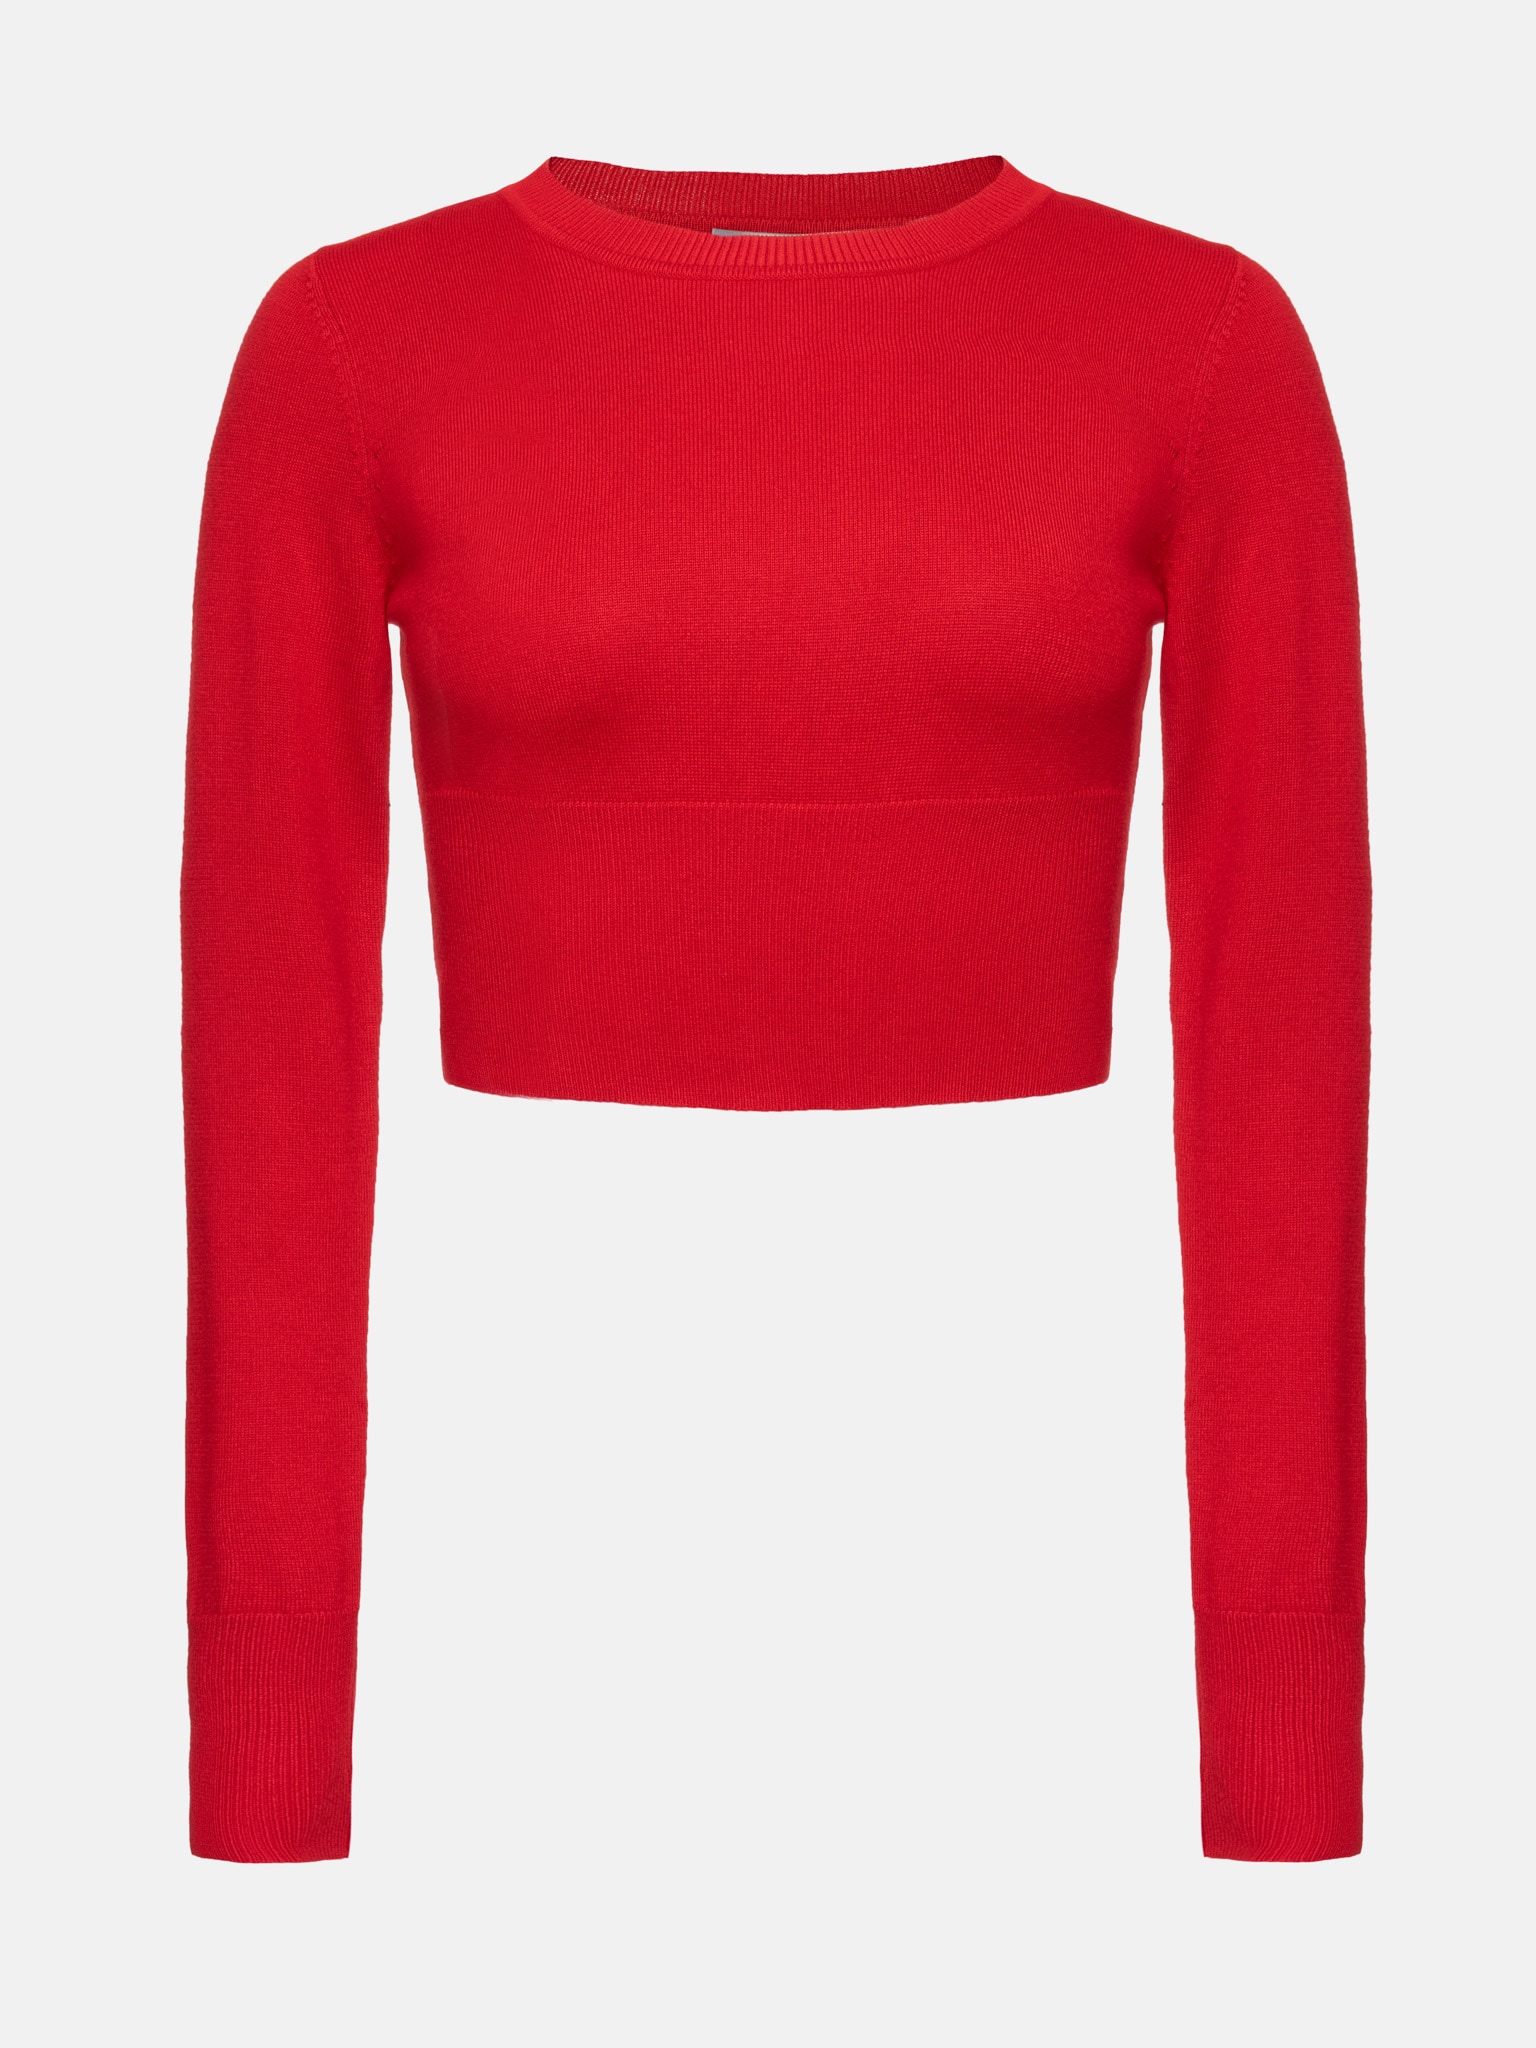 Long-sleeve jersey crop top :: LICHI - Online fashion store